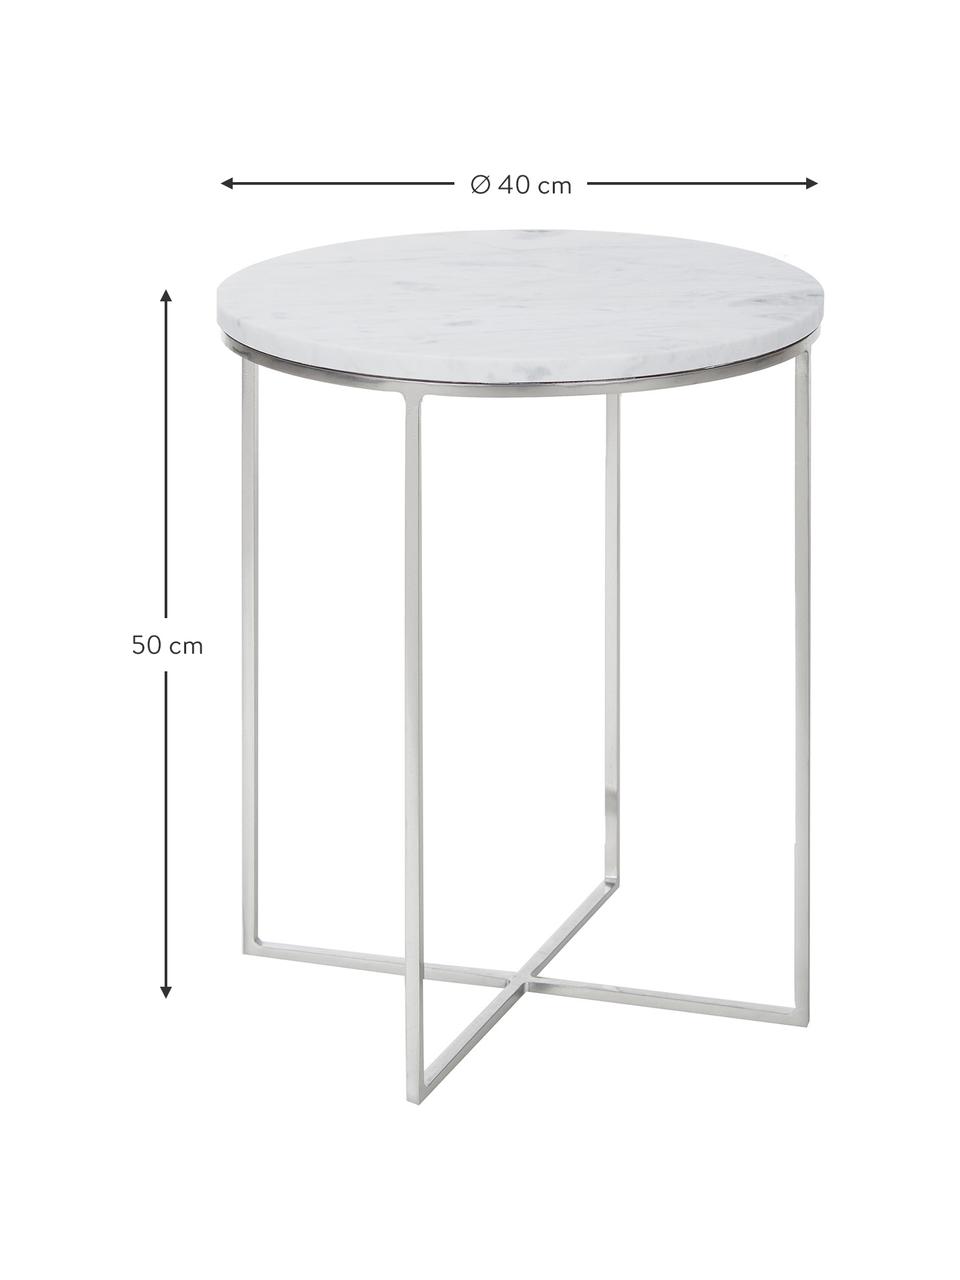 Kulatý mramorový odkládací stolek Alys, Bílá, mramorovaná, stříbrná, Ø 40 cm, V 50 cm